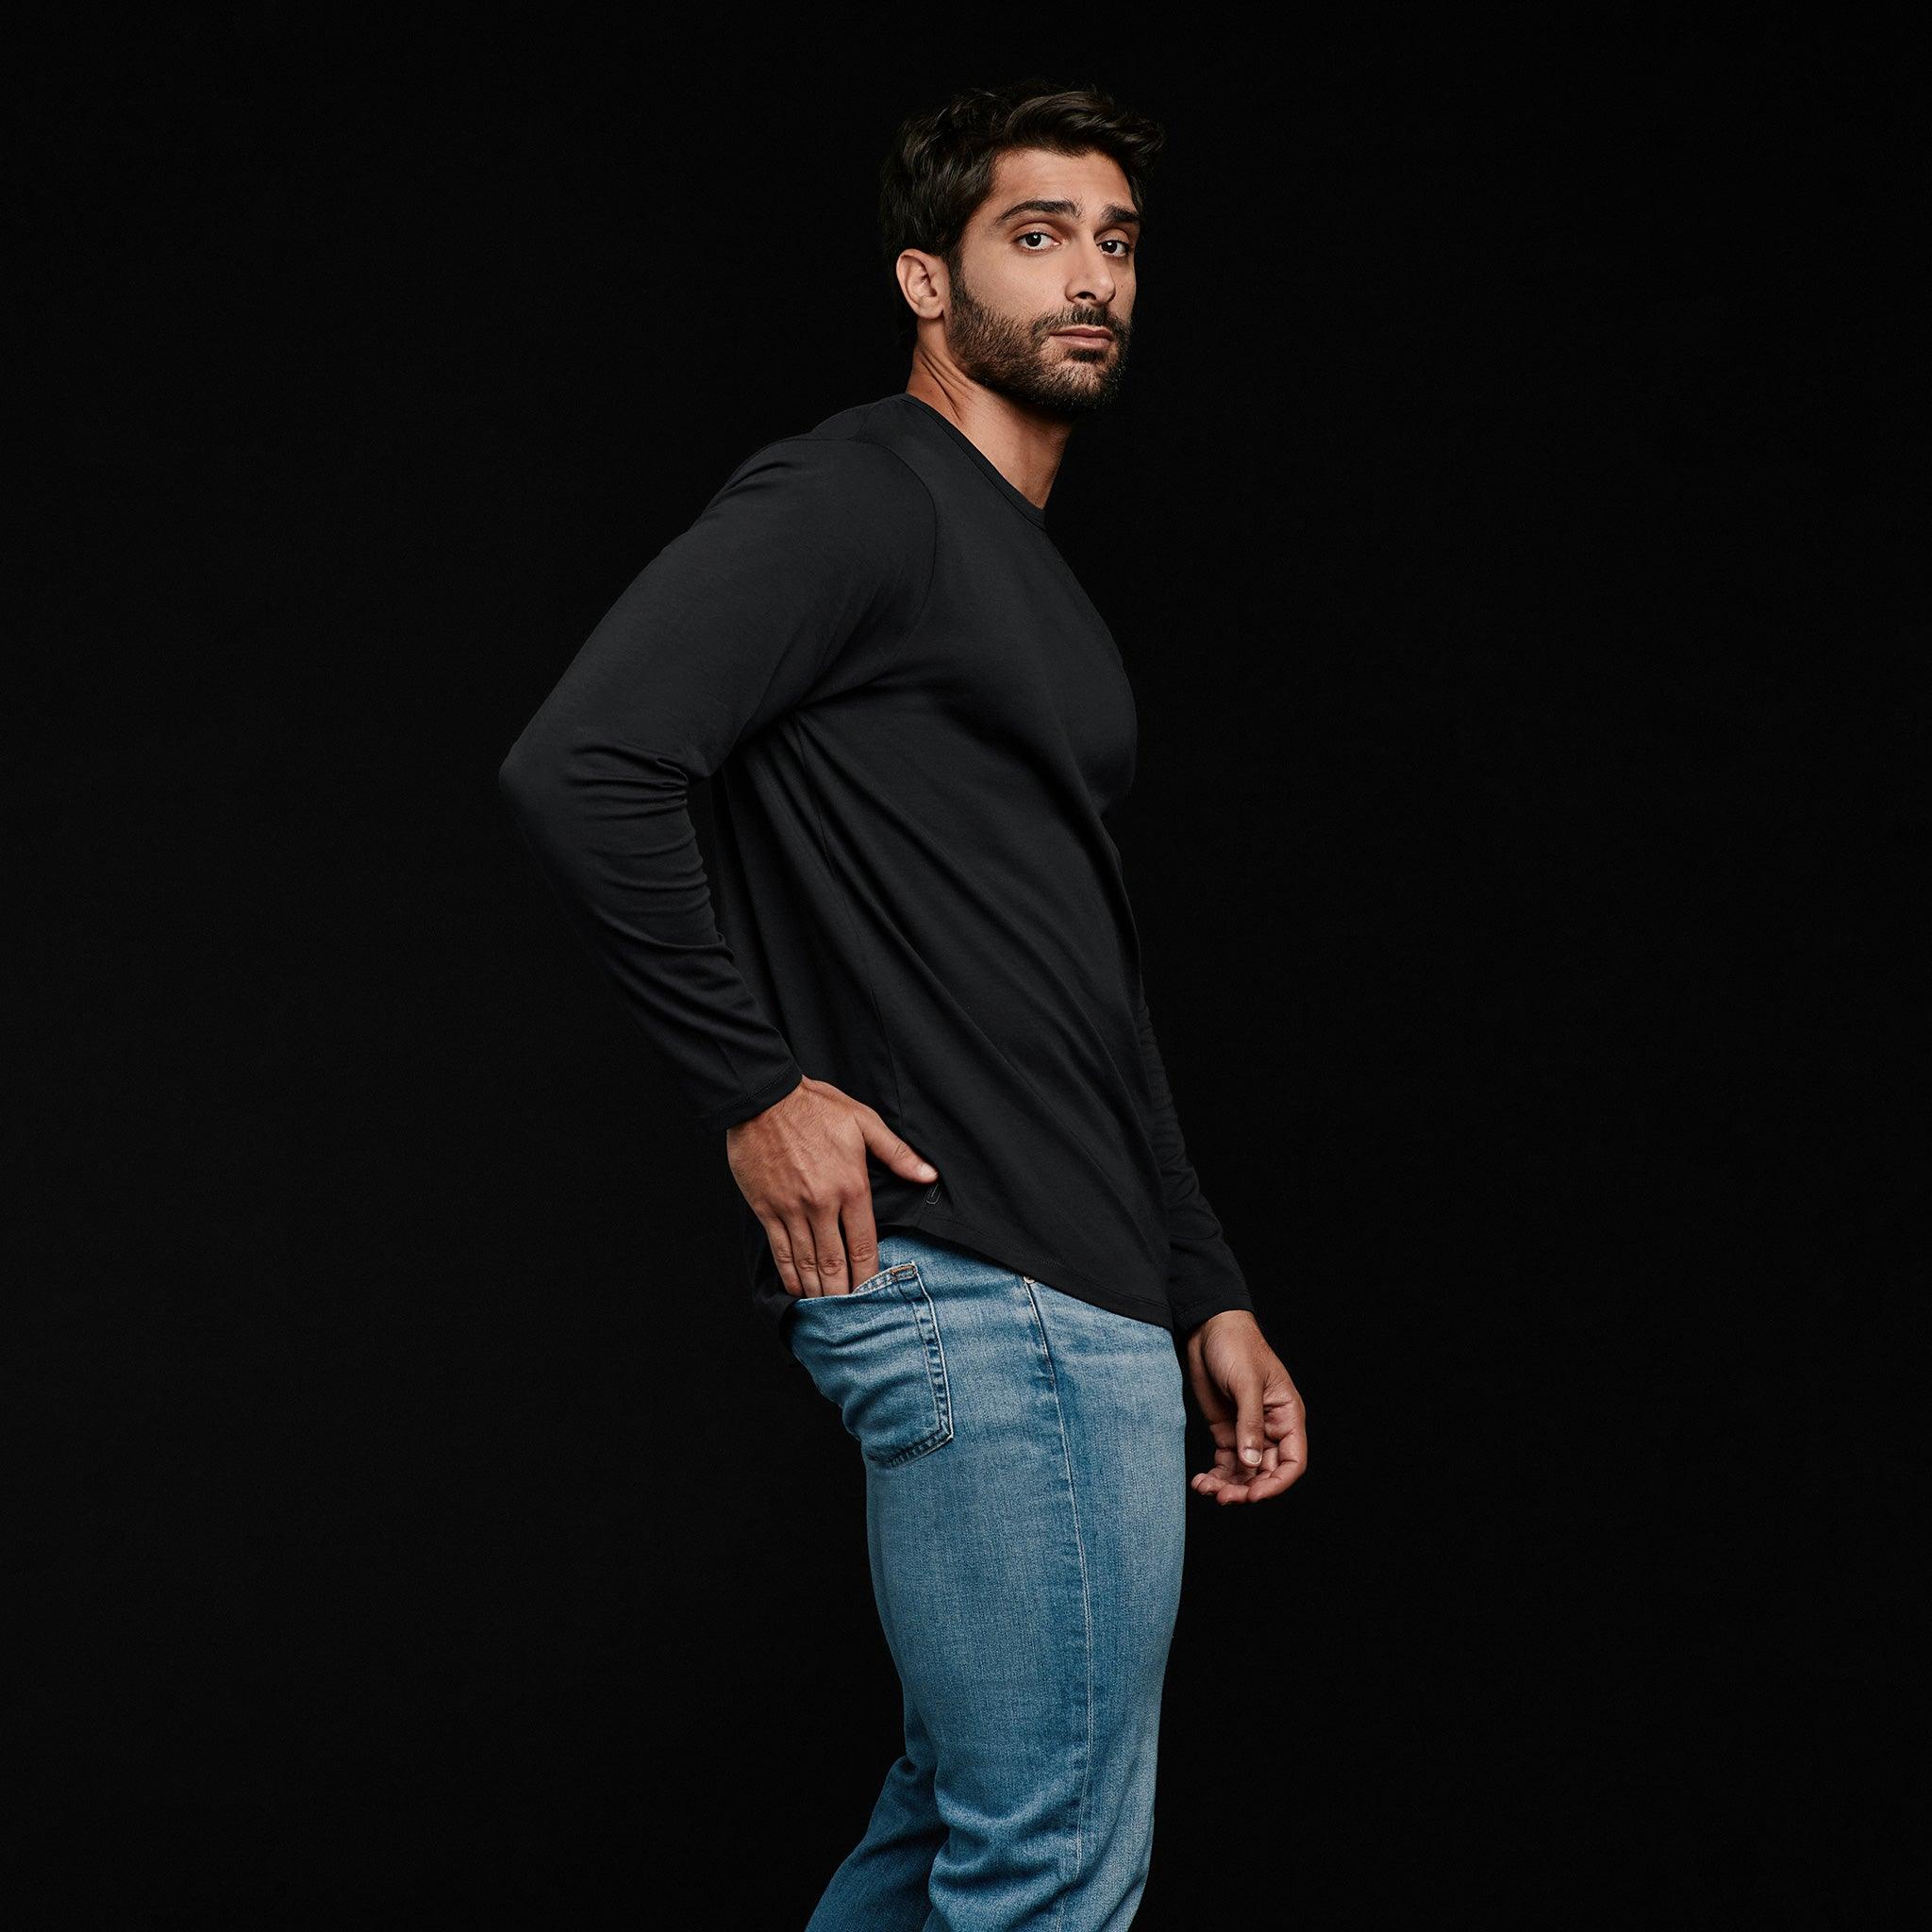 Men's Long Sleeve Curved Hem T-Shirt | Black